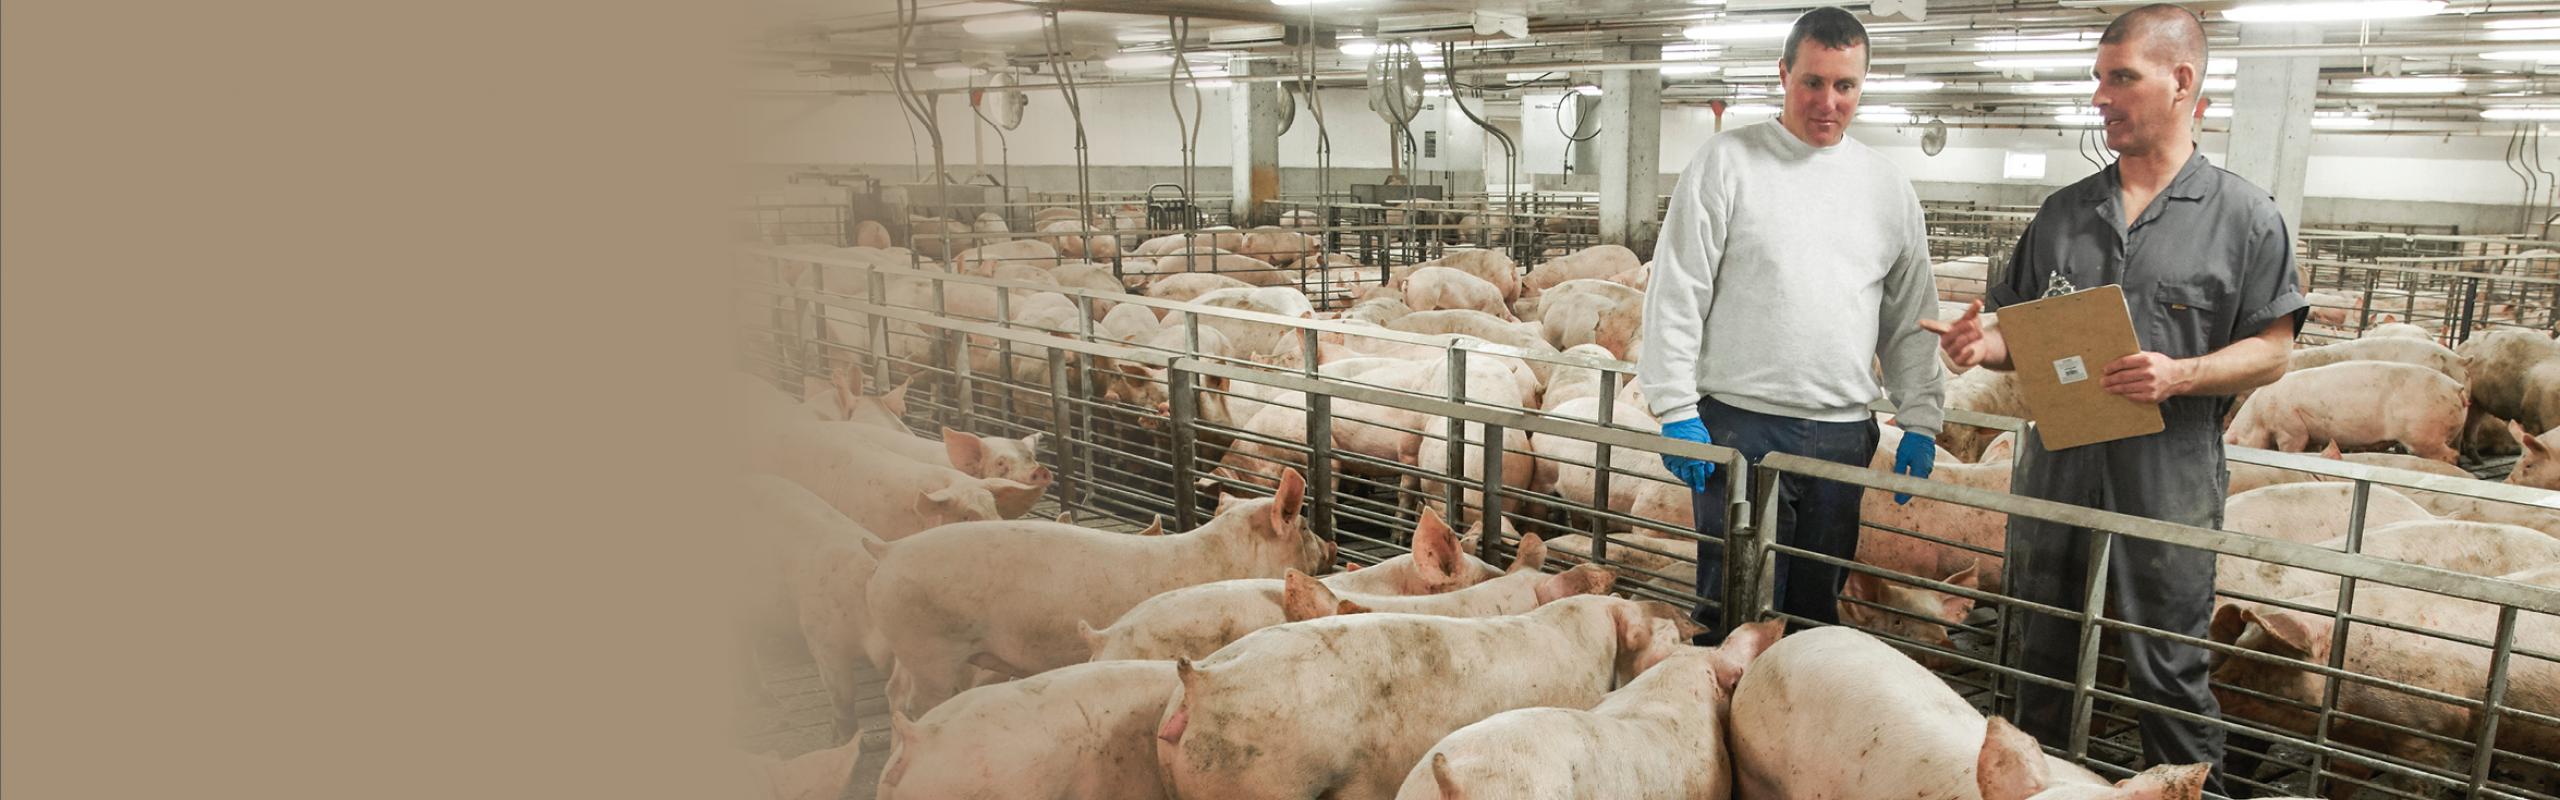 Swine farm health check